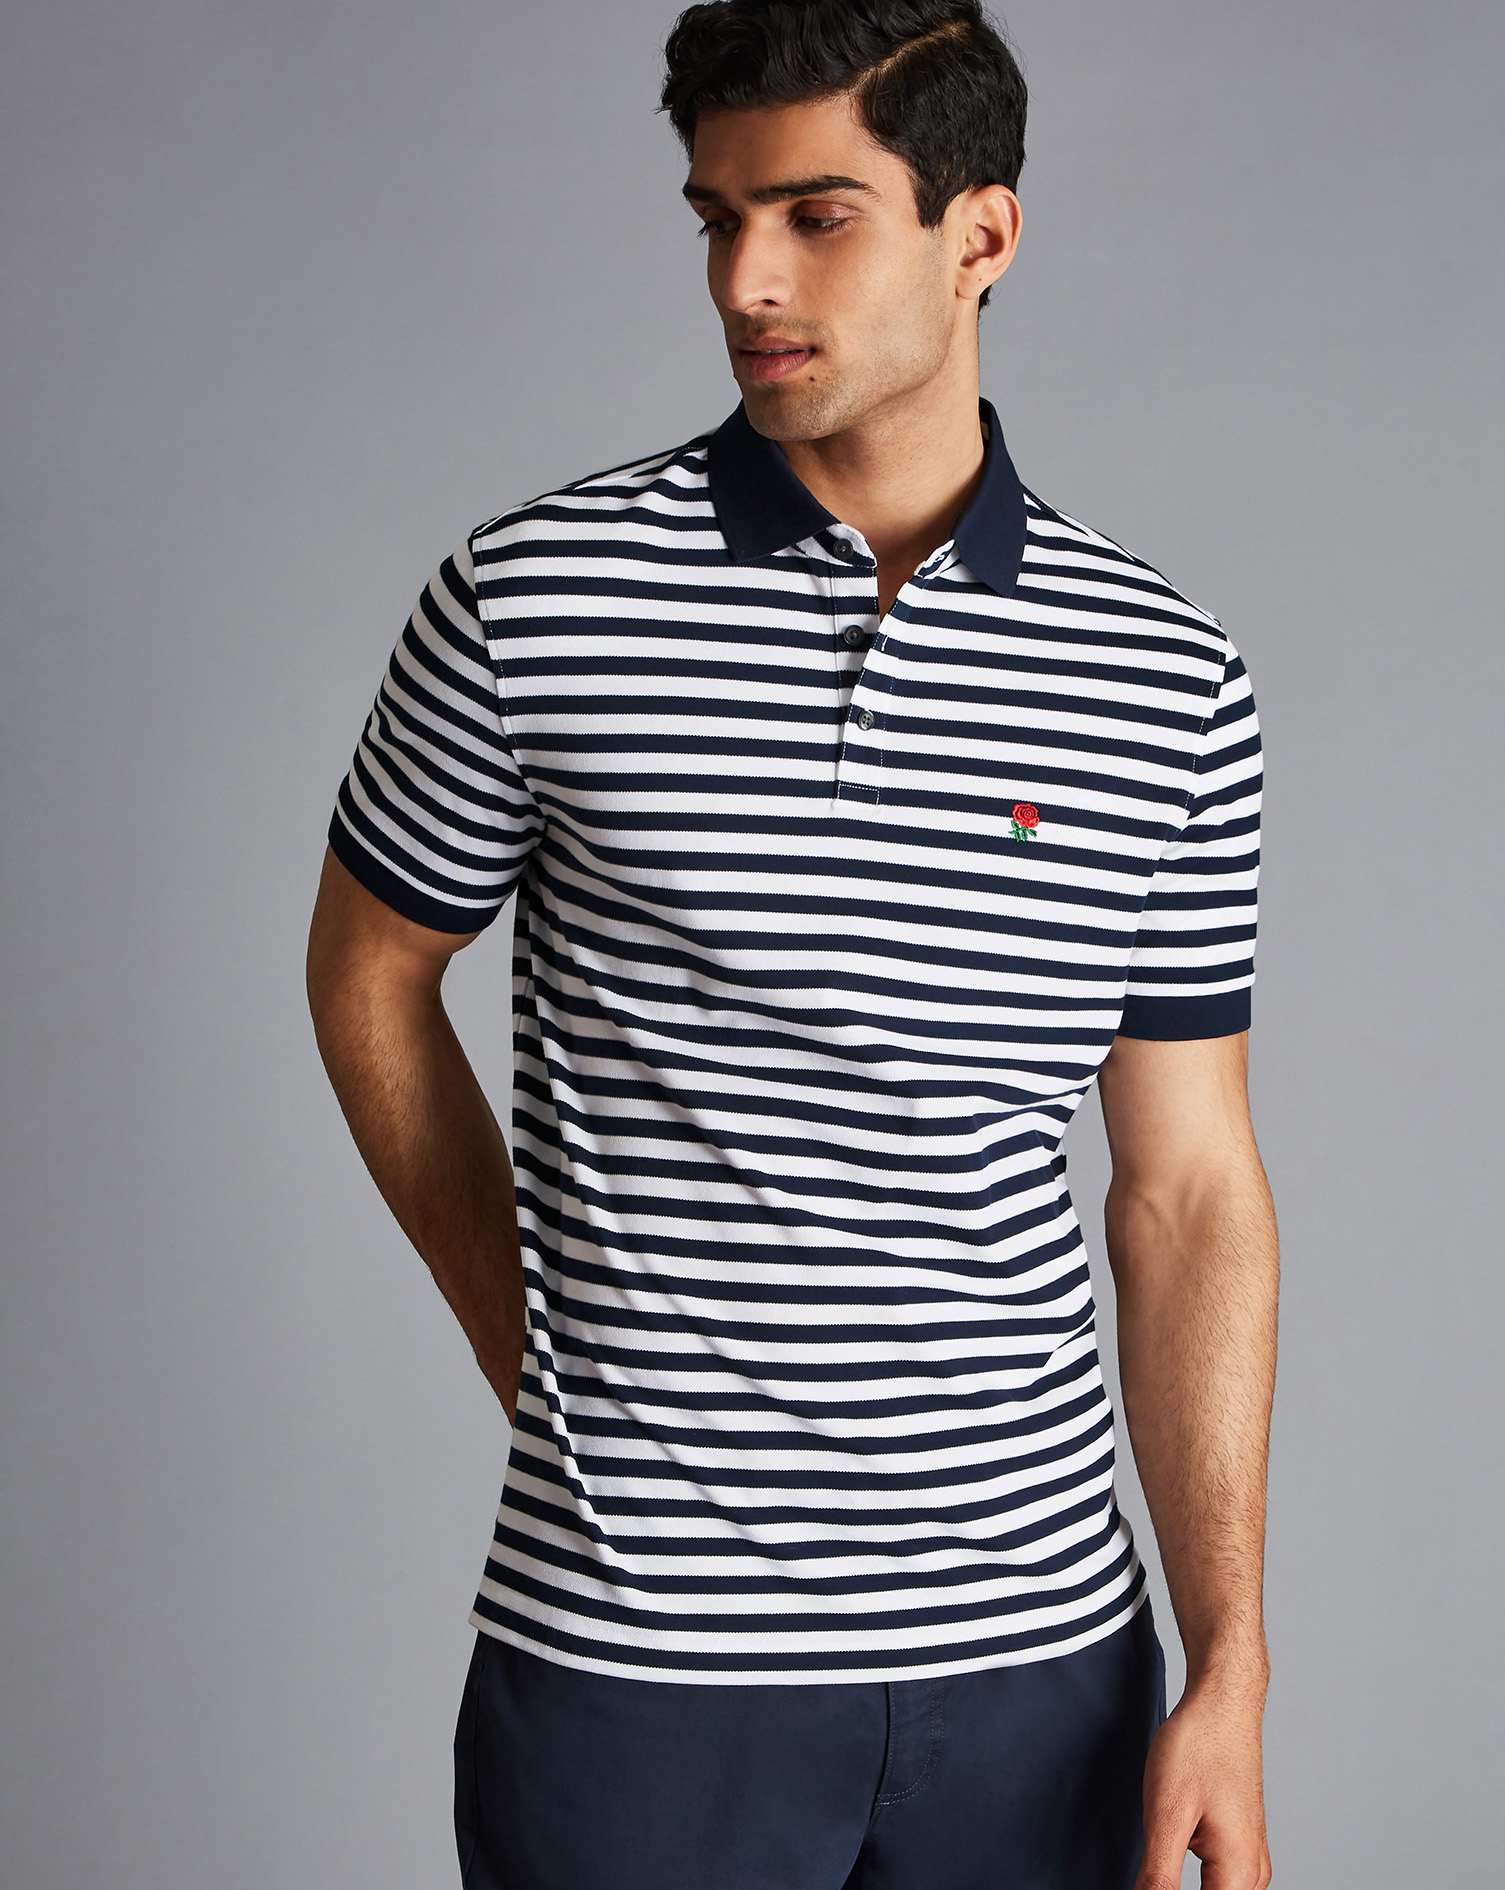 Men's Charles Tyrwhitt England Rugby Stripe Pique Polo Shirt - Navy & White Blue Size Medium Cotton
